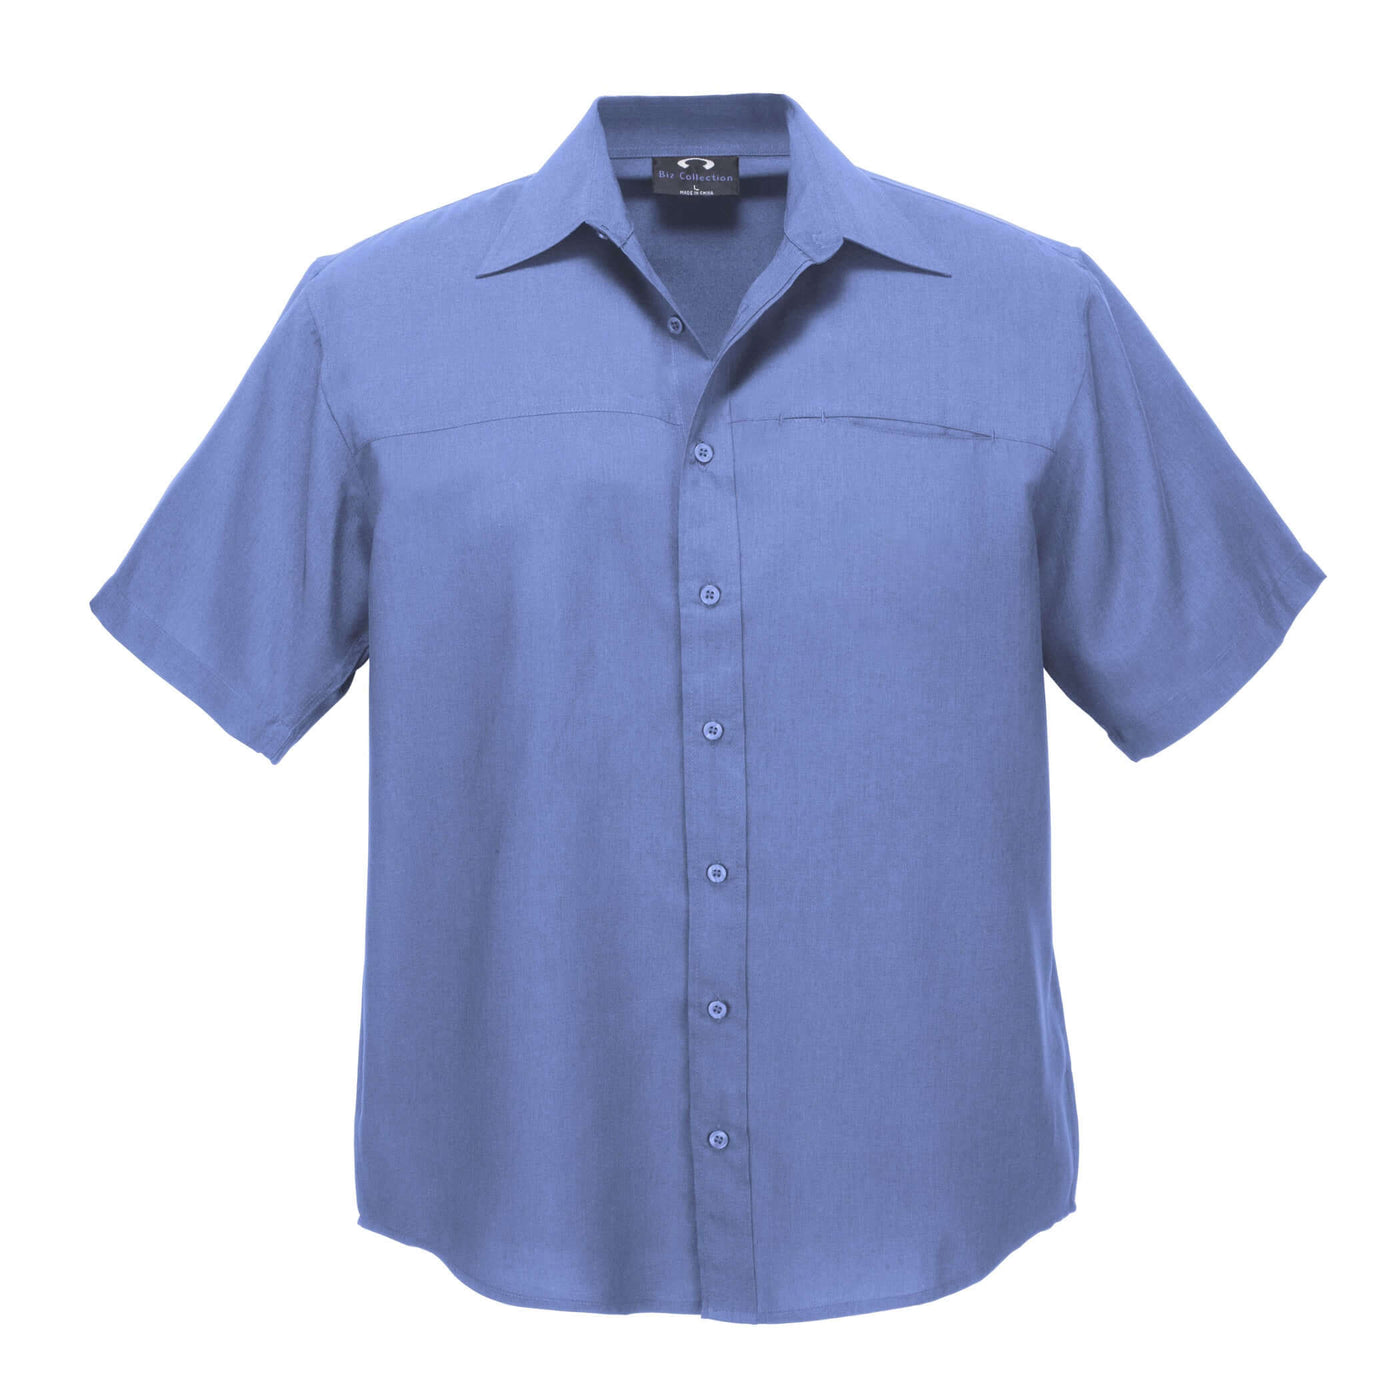 Biz Collection - Plain Oasis Mens Shirt Short Sleeve